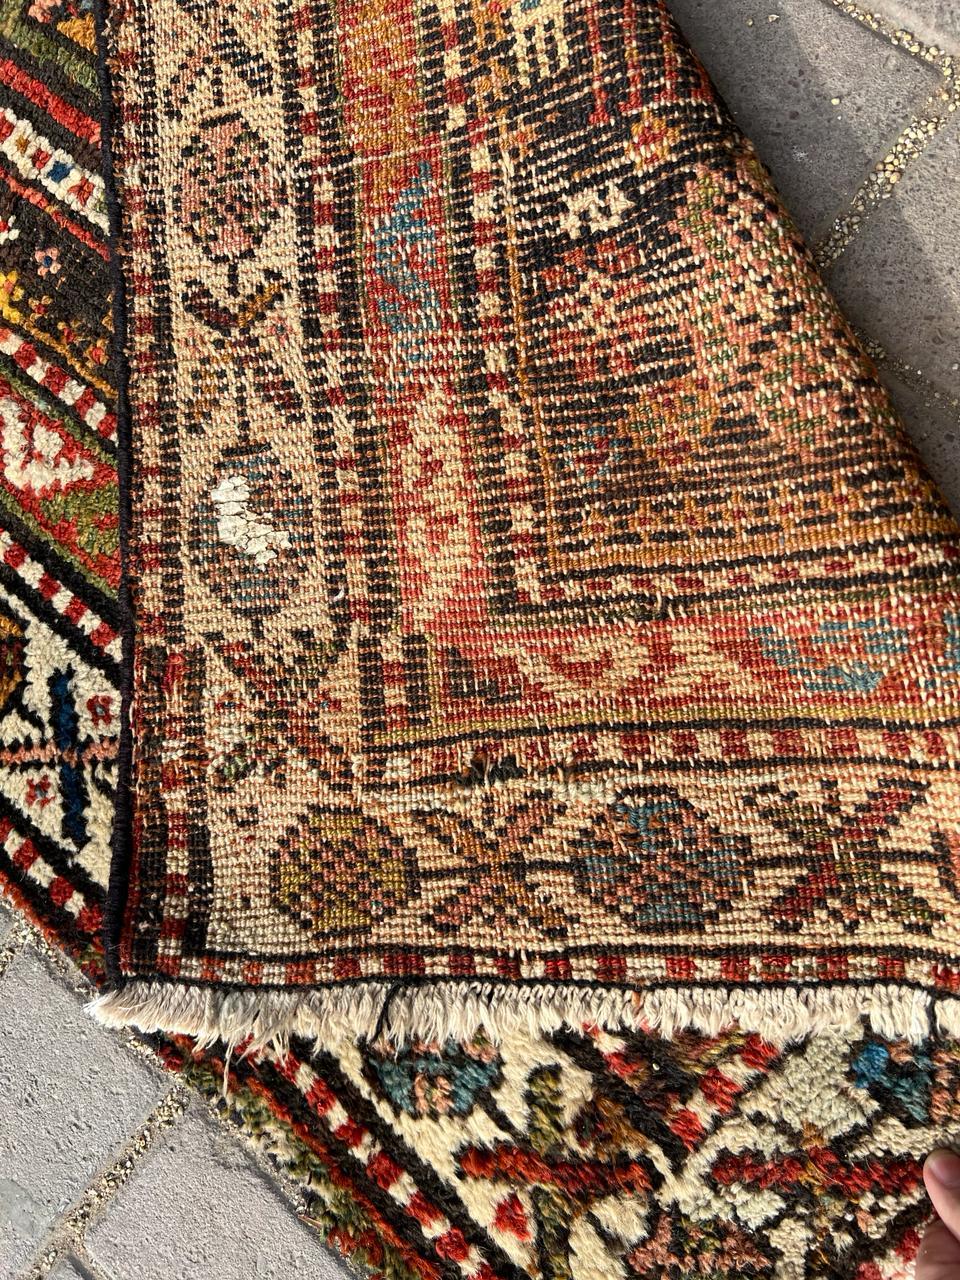 Wool Handmade Antique Persian Kurdish Runner Rug 2.5' x 11.8', 1900s - 2B25 For Sale